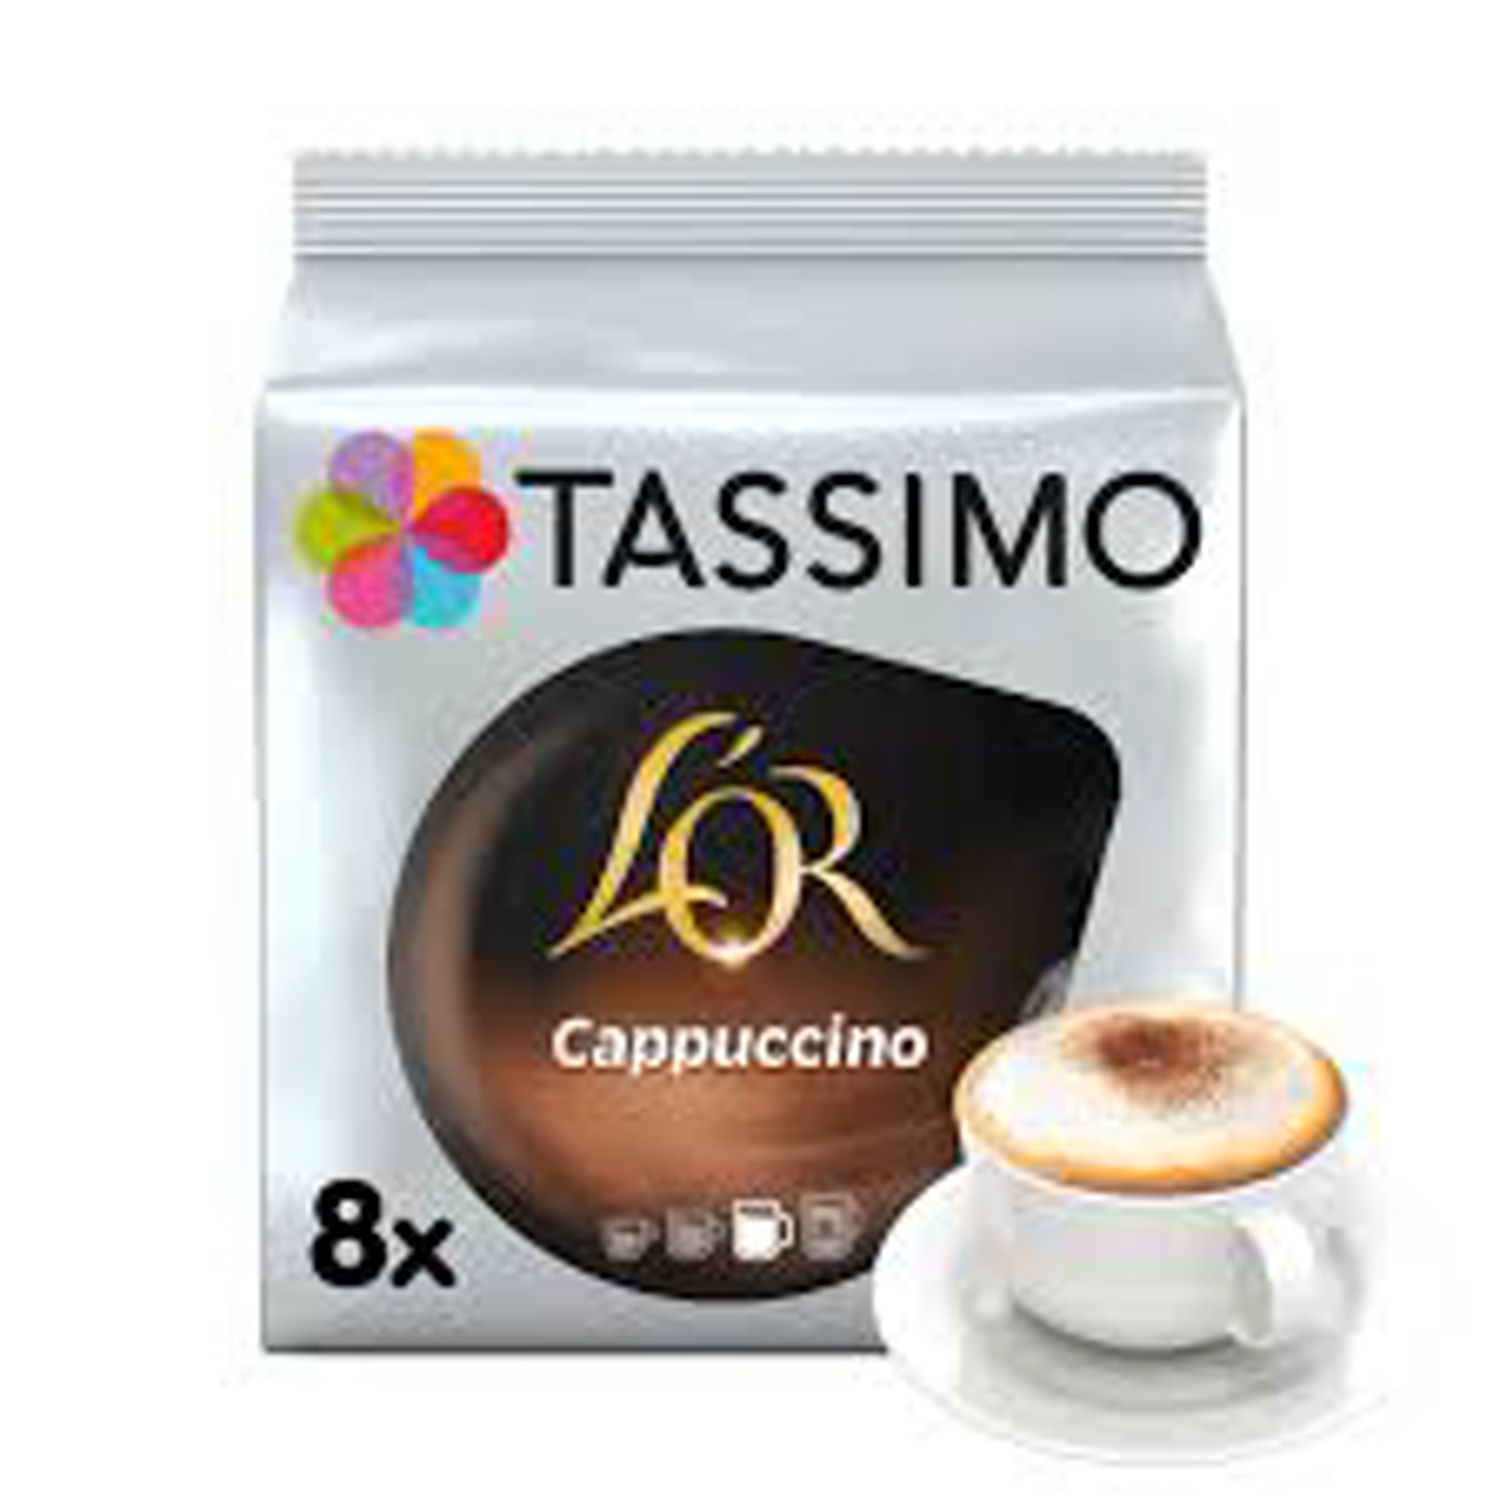 TASSIMO LÓR Cappuccino Kapseln